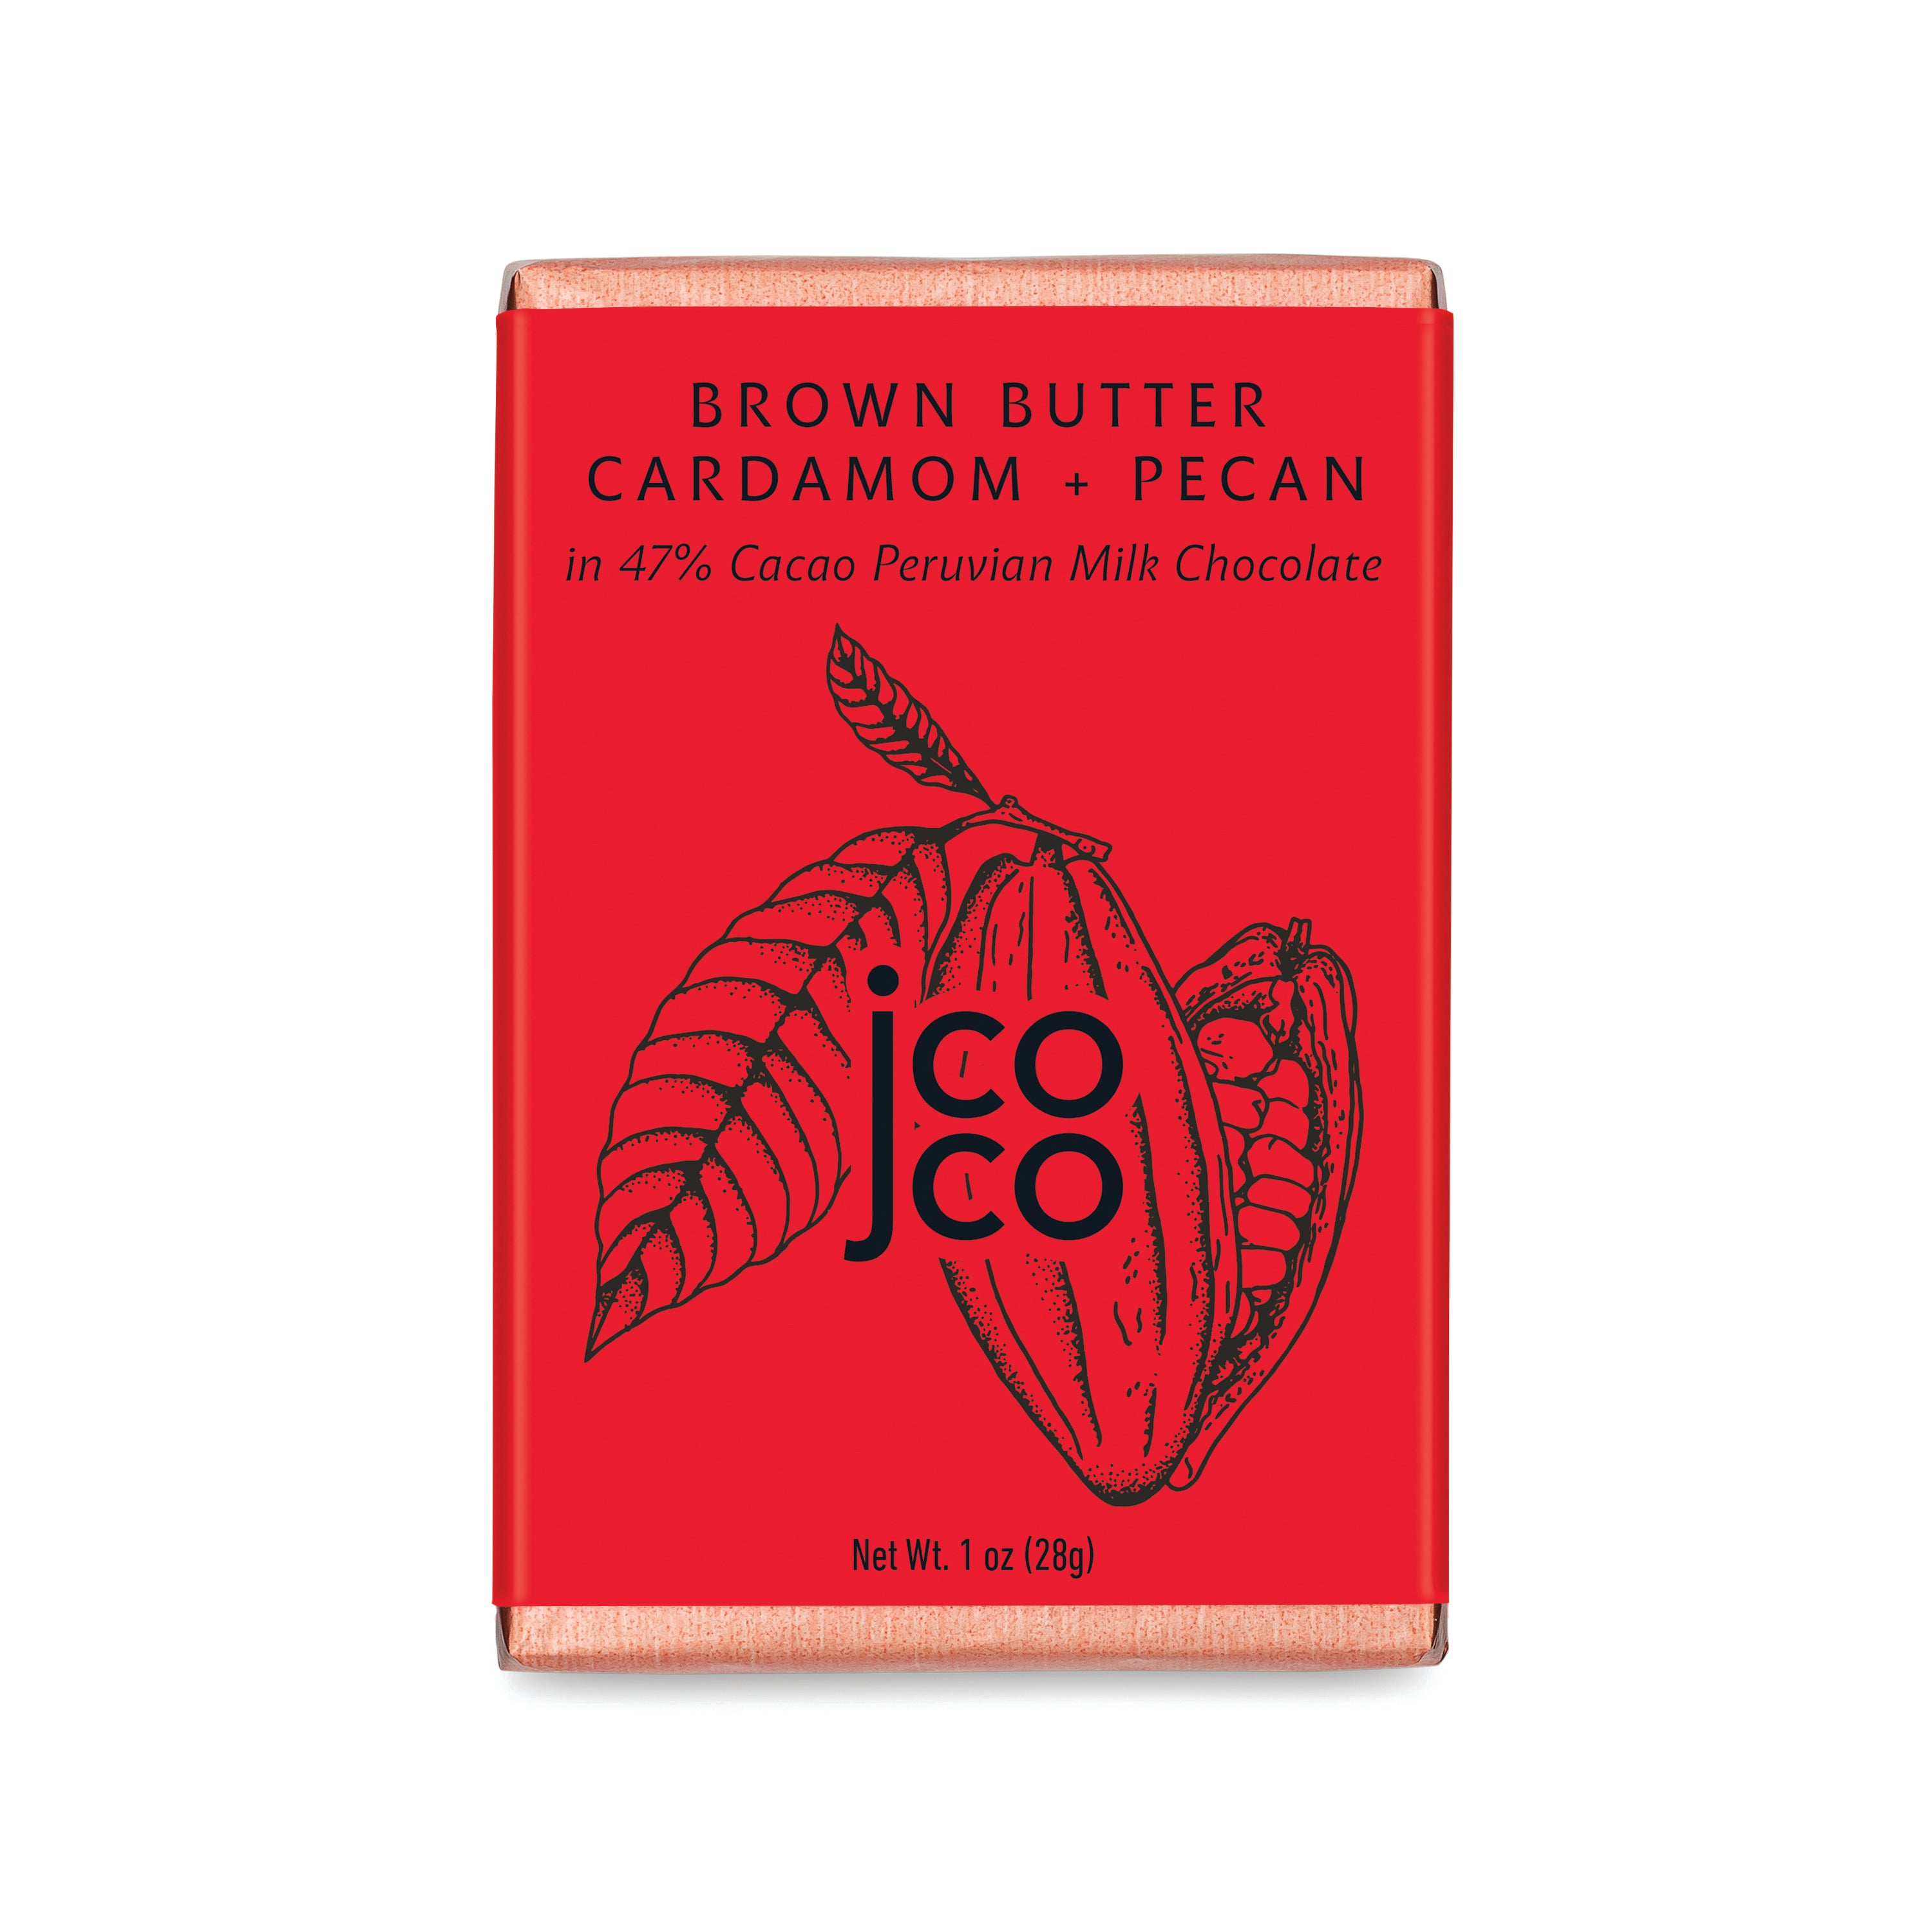 1oz jcoco Brown Butter Cardamom + Pecan Holiday Chocolate Bar